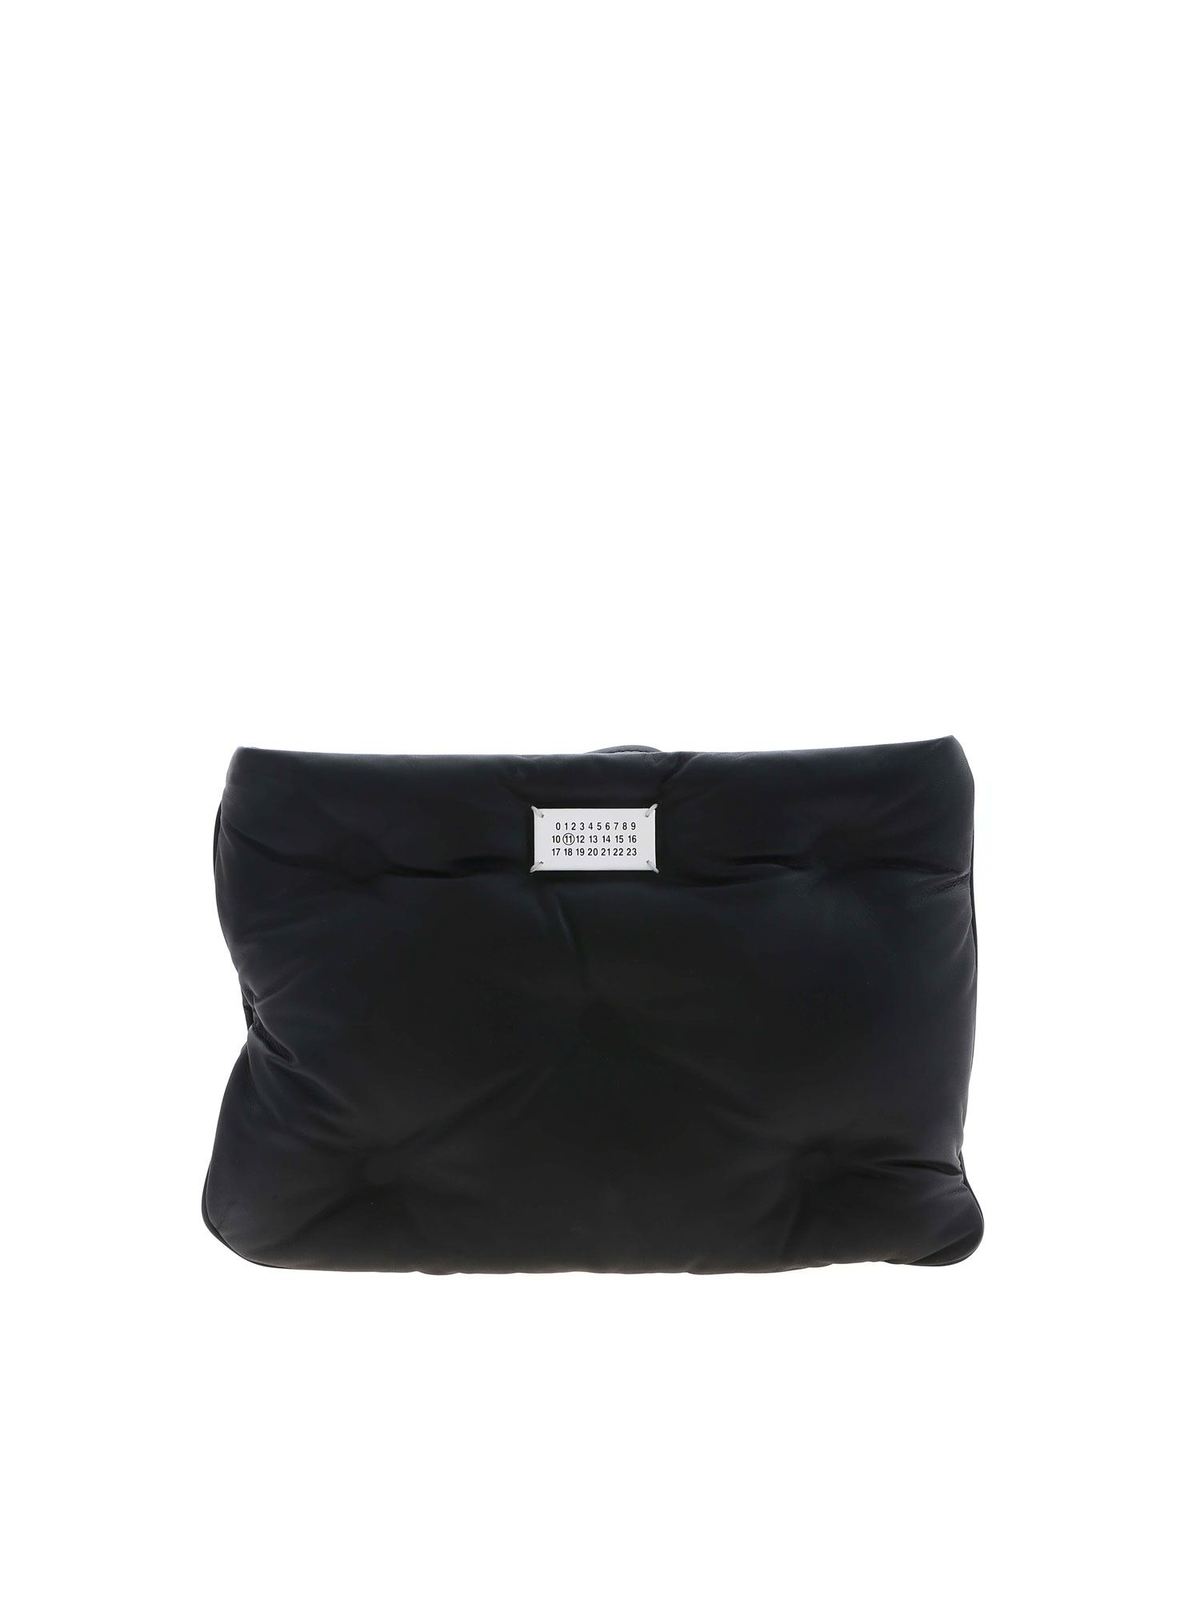 Clutches Maison Margiela - Glam Slam clutch bag in black ...